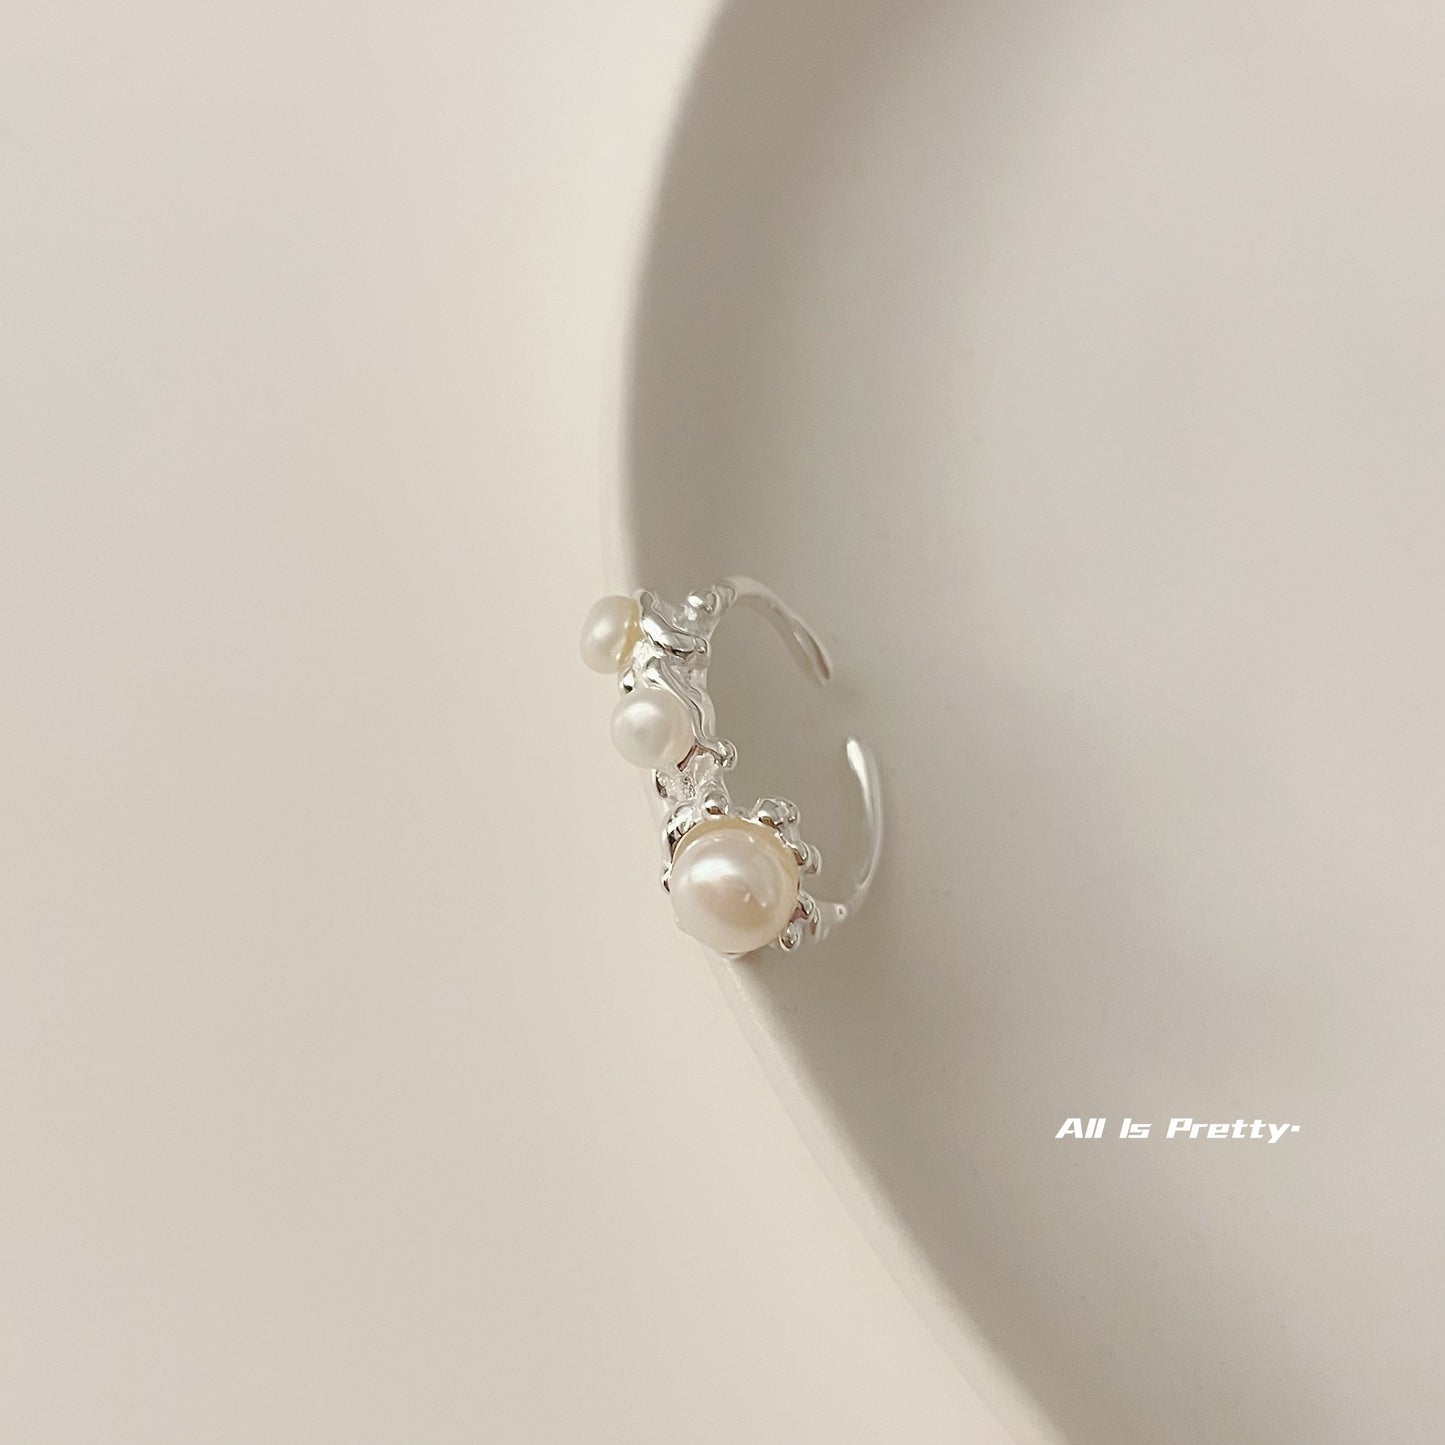 Handmade pearls sterling silver ring